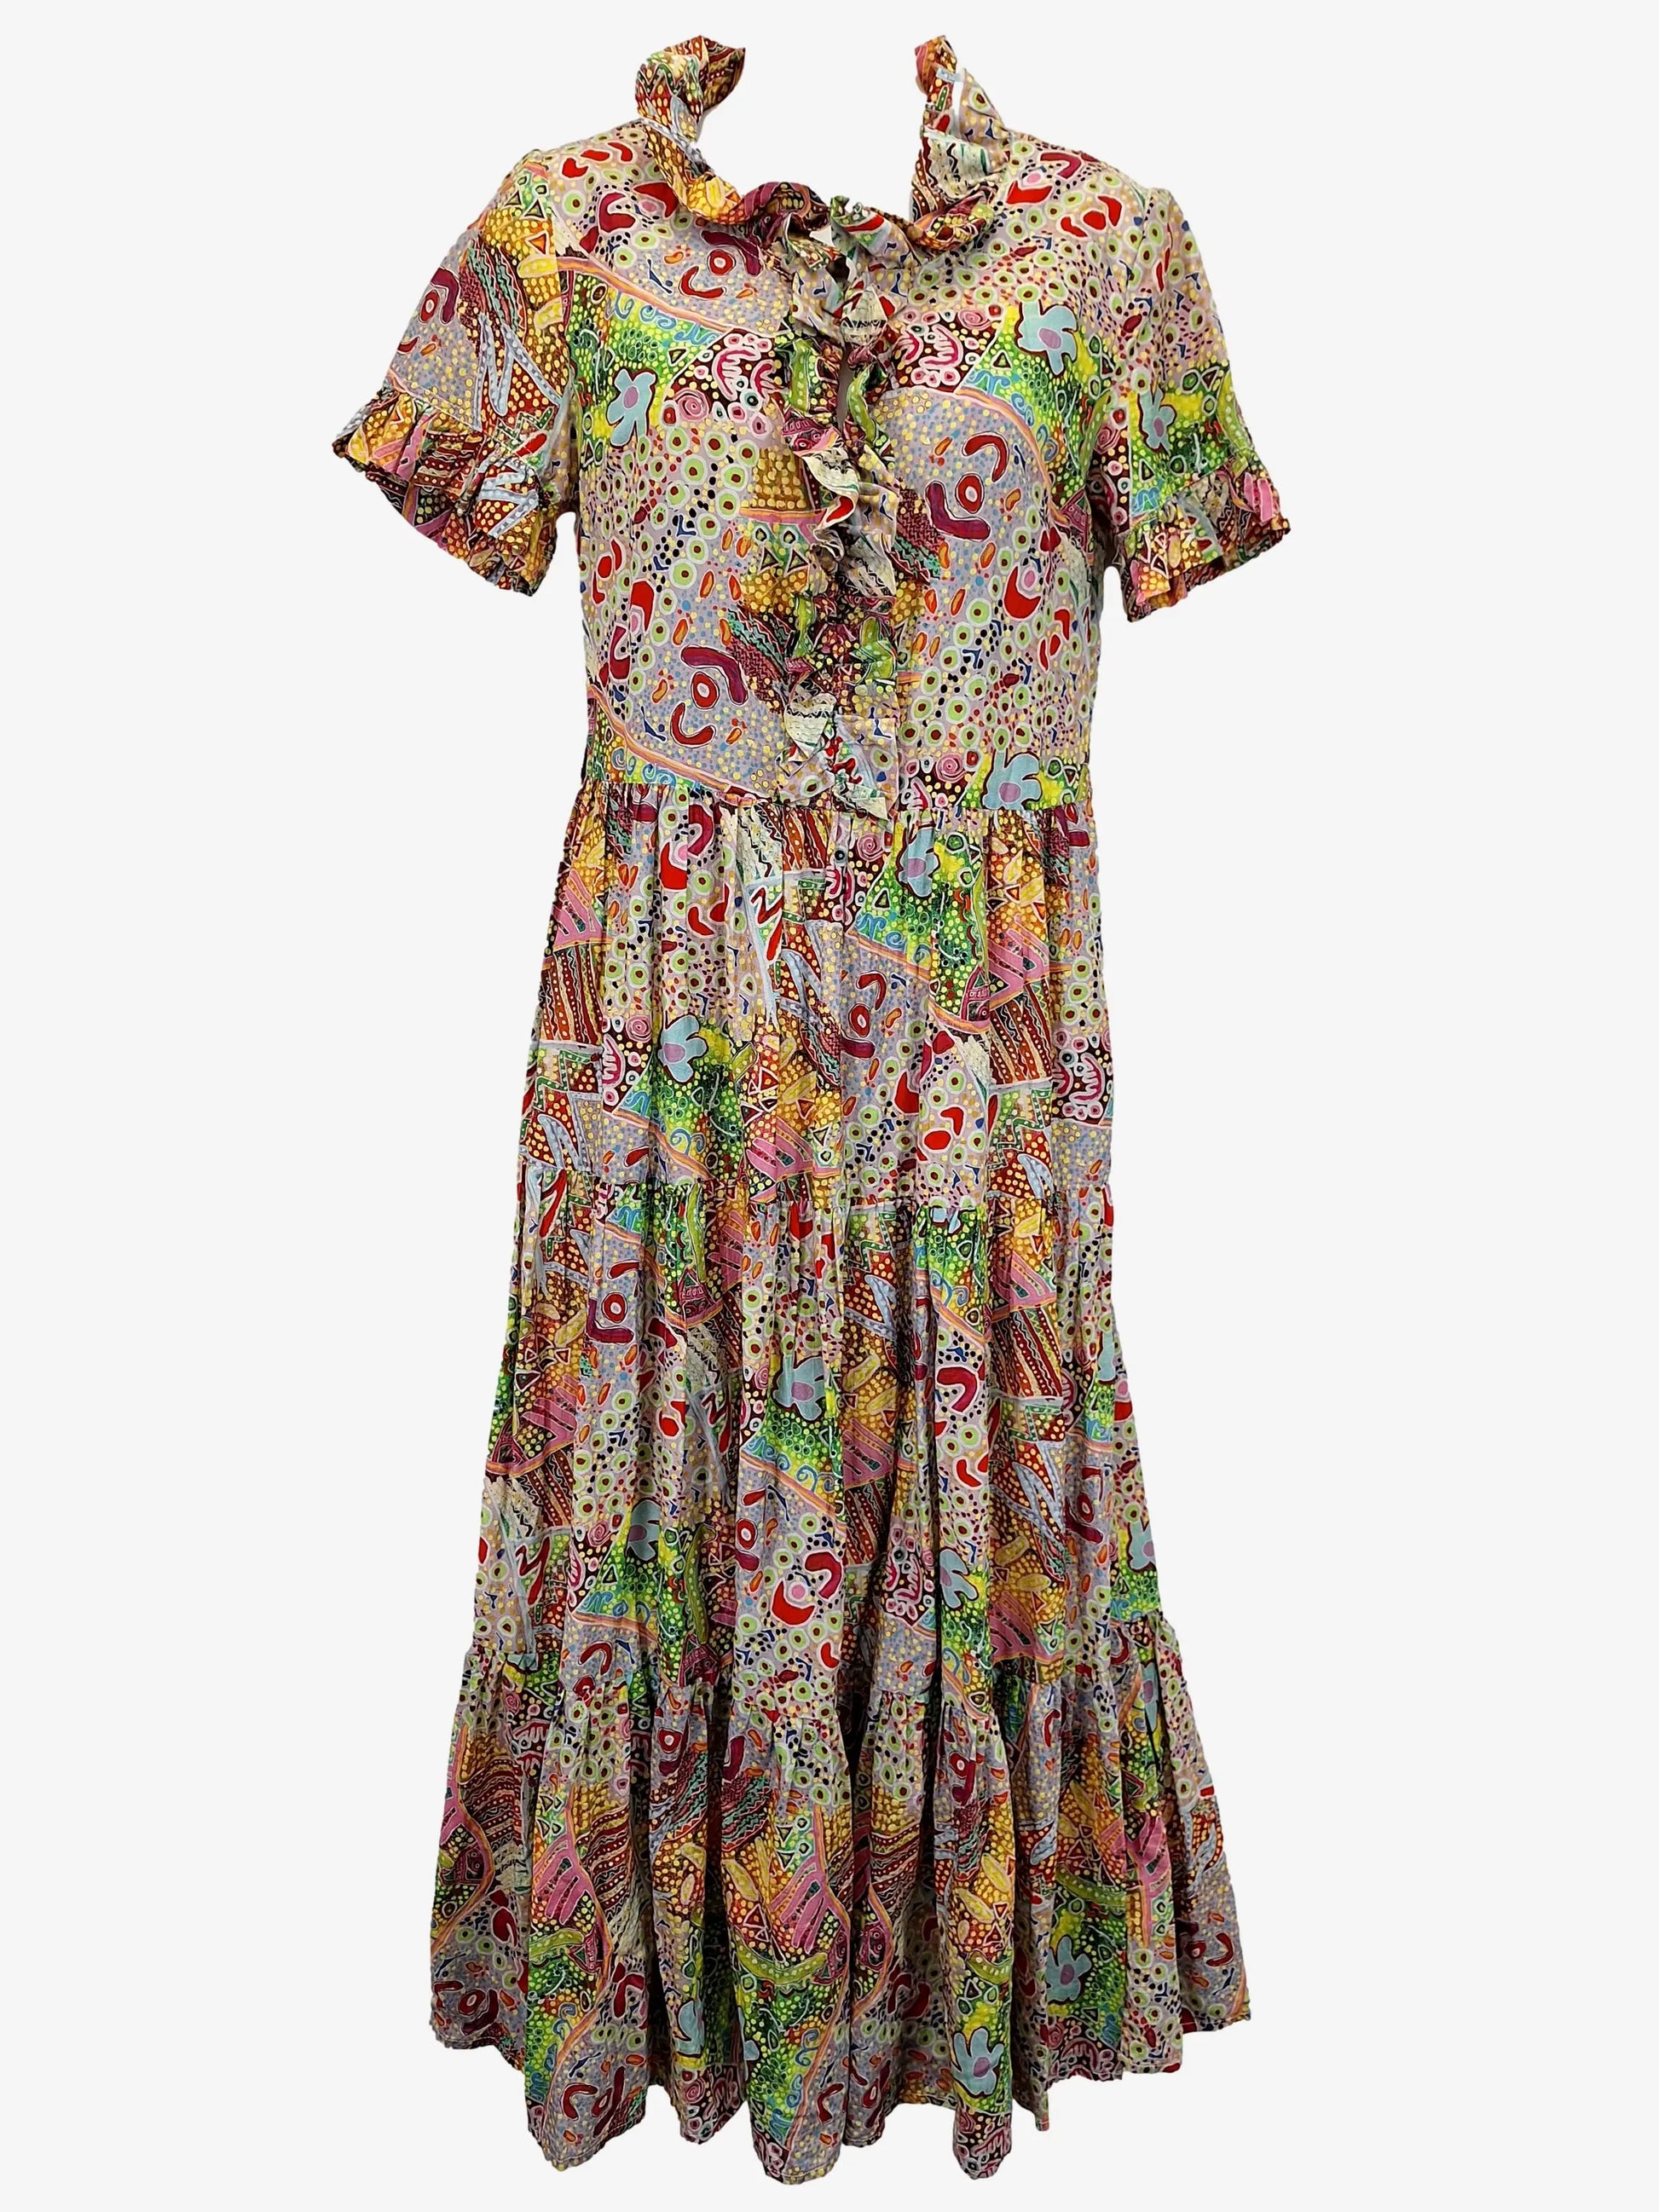 Alessandra Ruffle Summer Midi Dress Size XXXS by SwapUp-Online Second Hand Store-Online Thrift Store